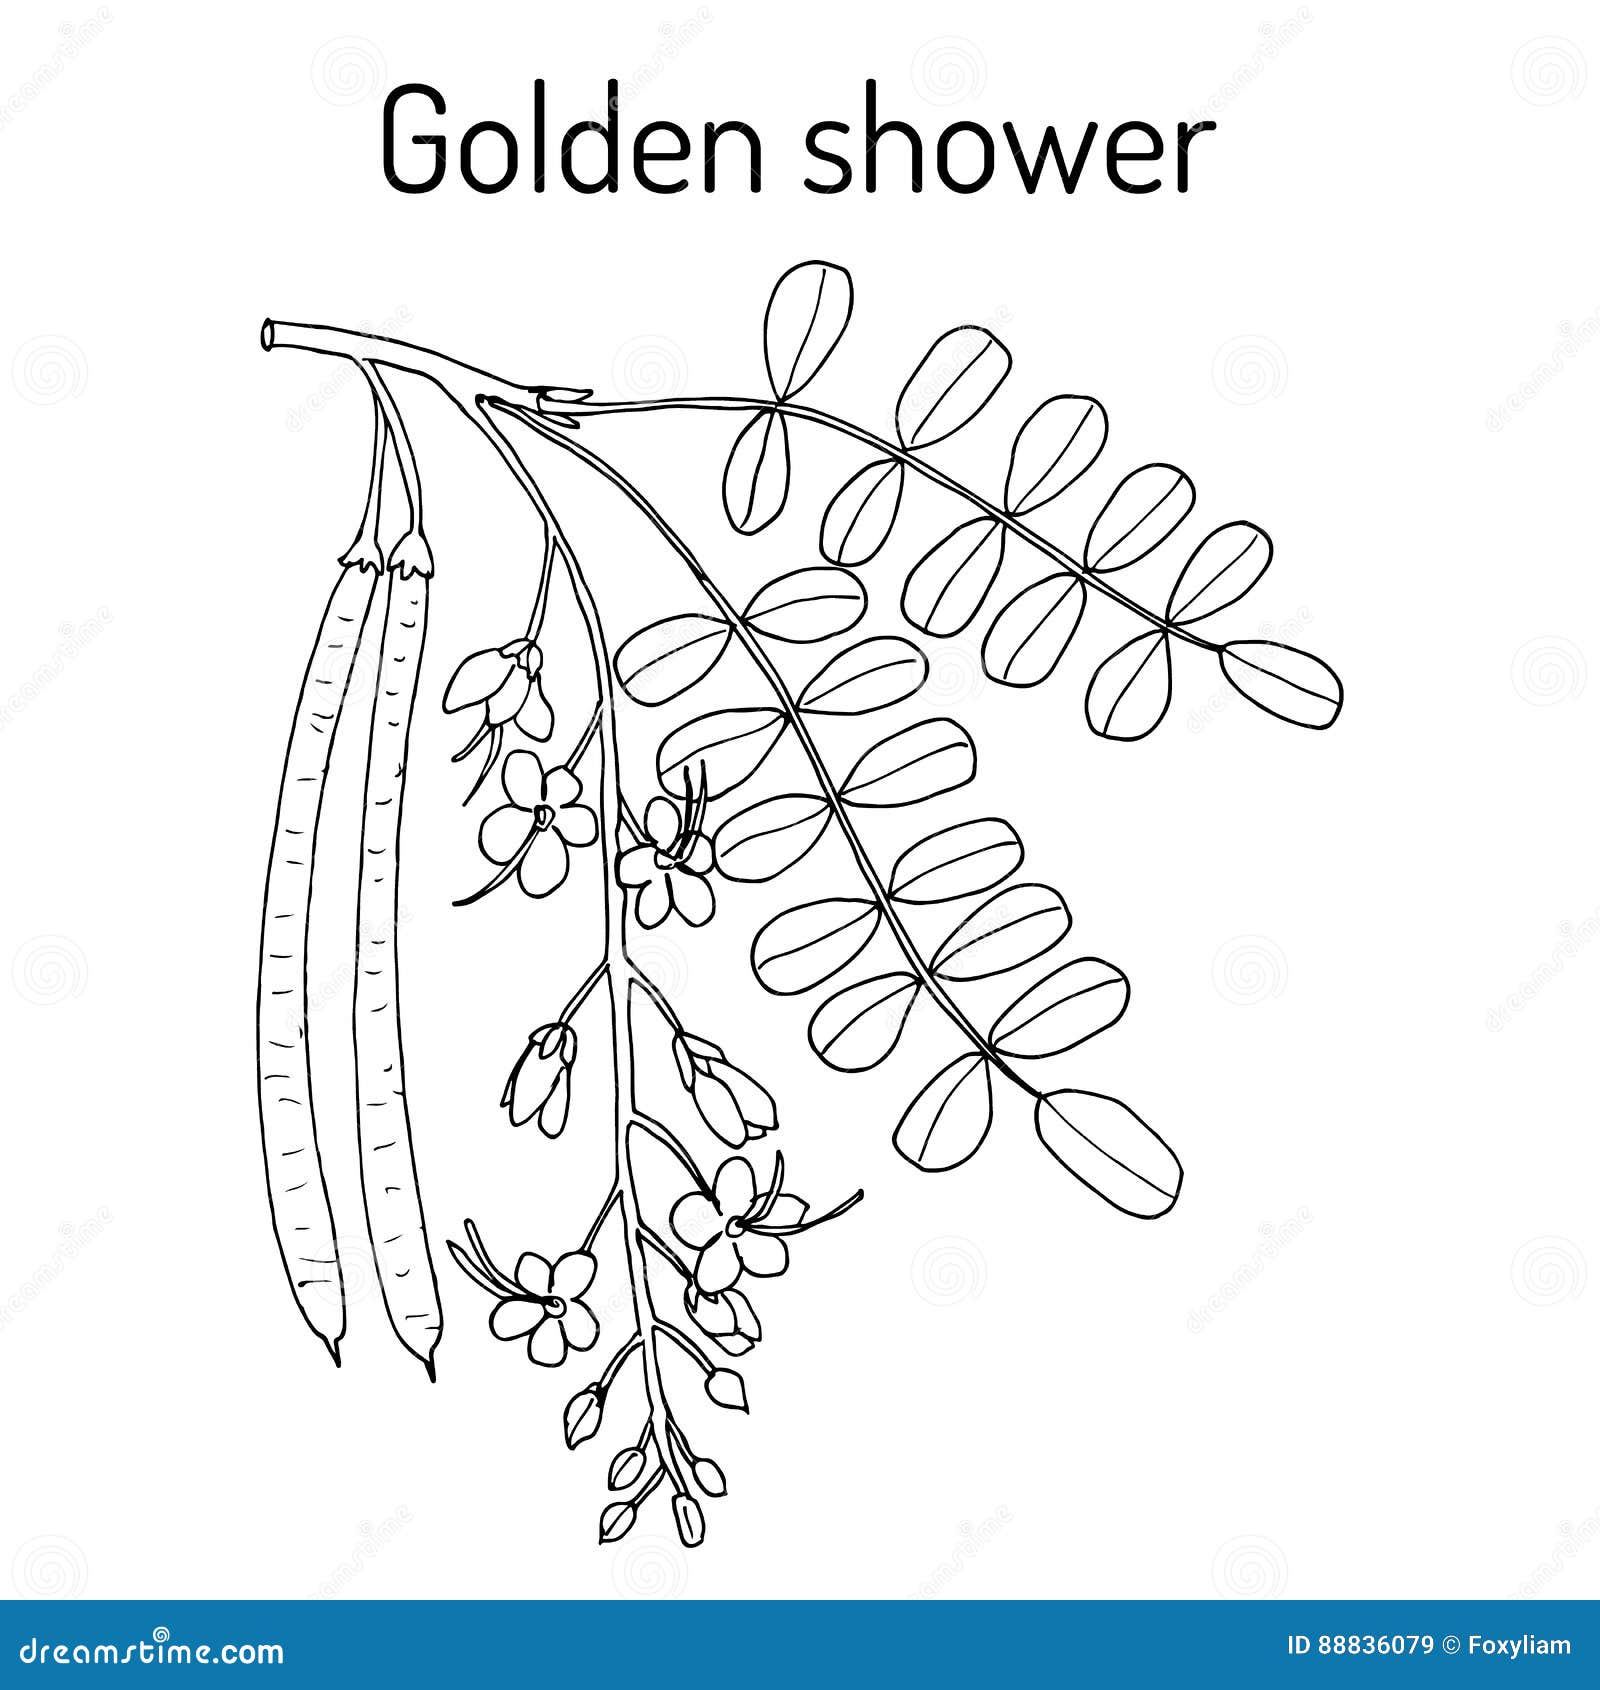 Golden shower drawings